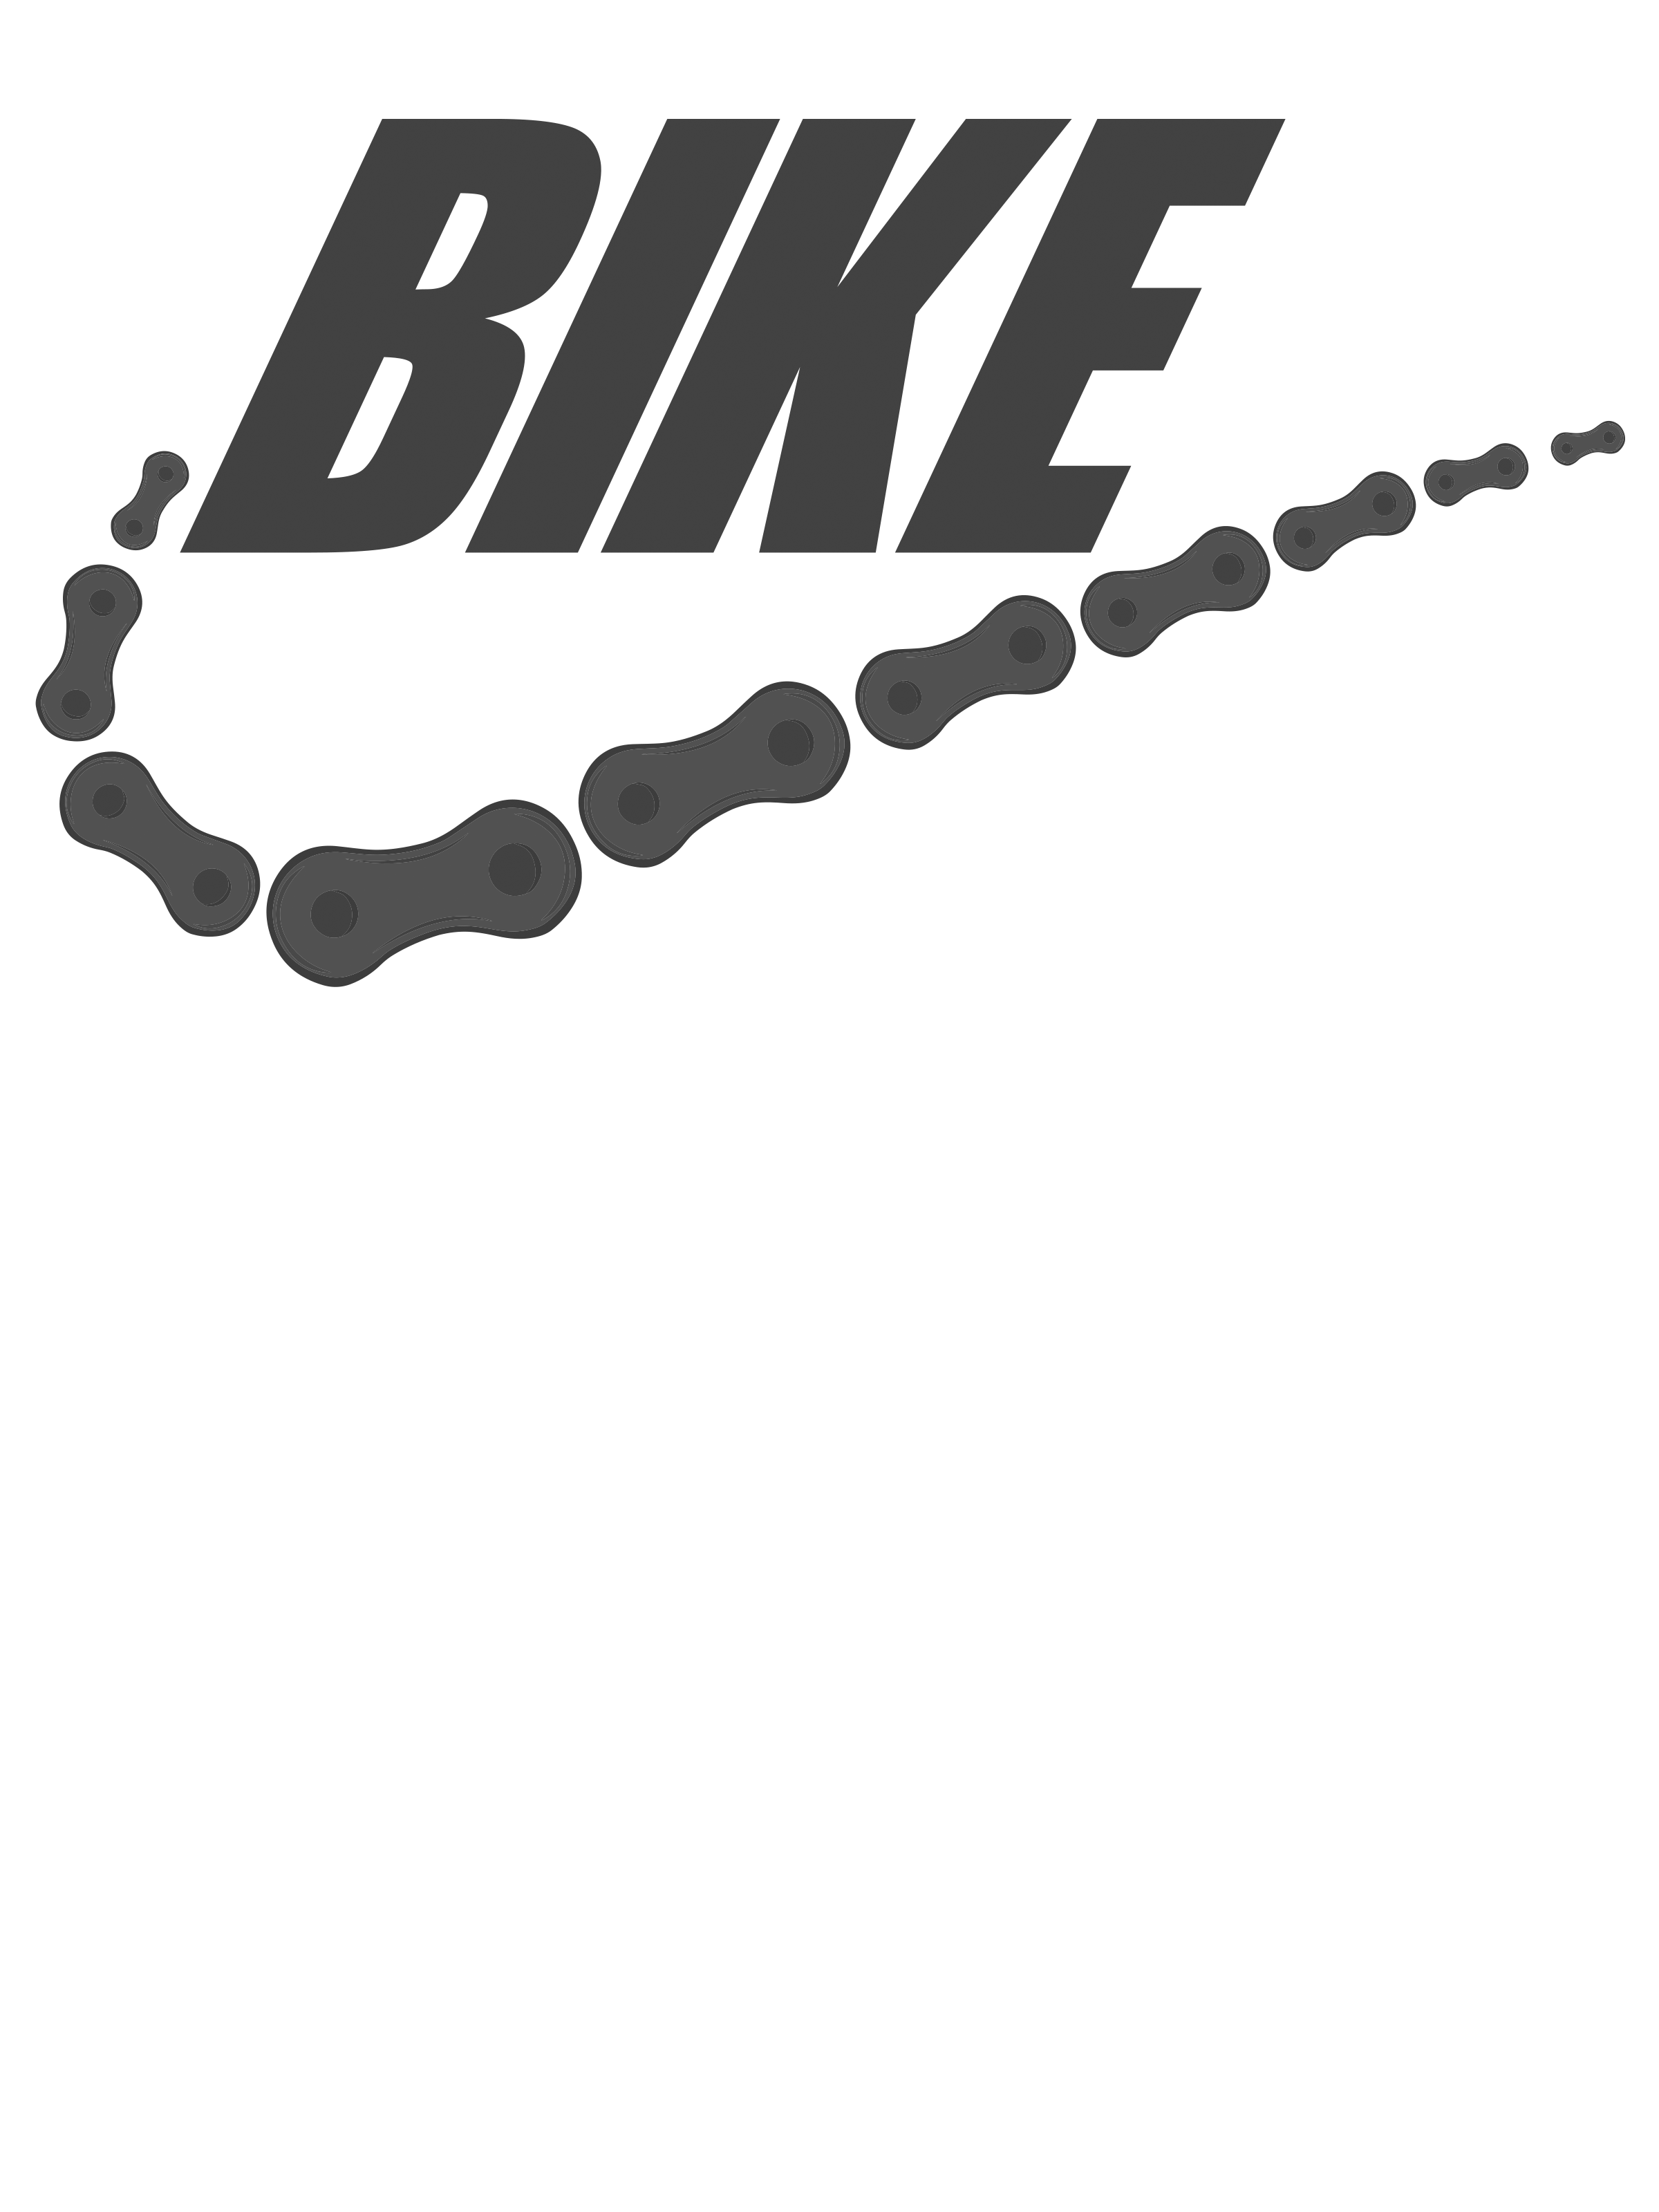 0213 – Bike and Tick